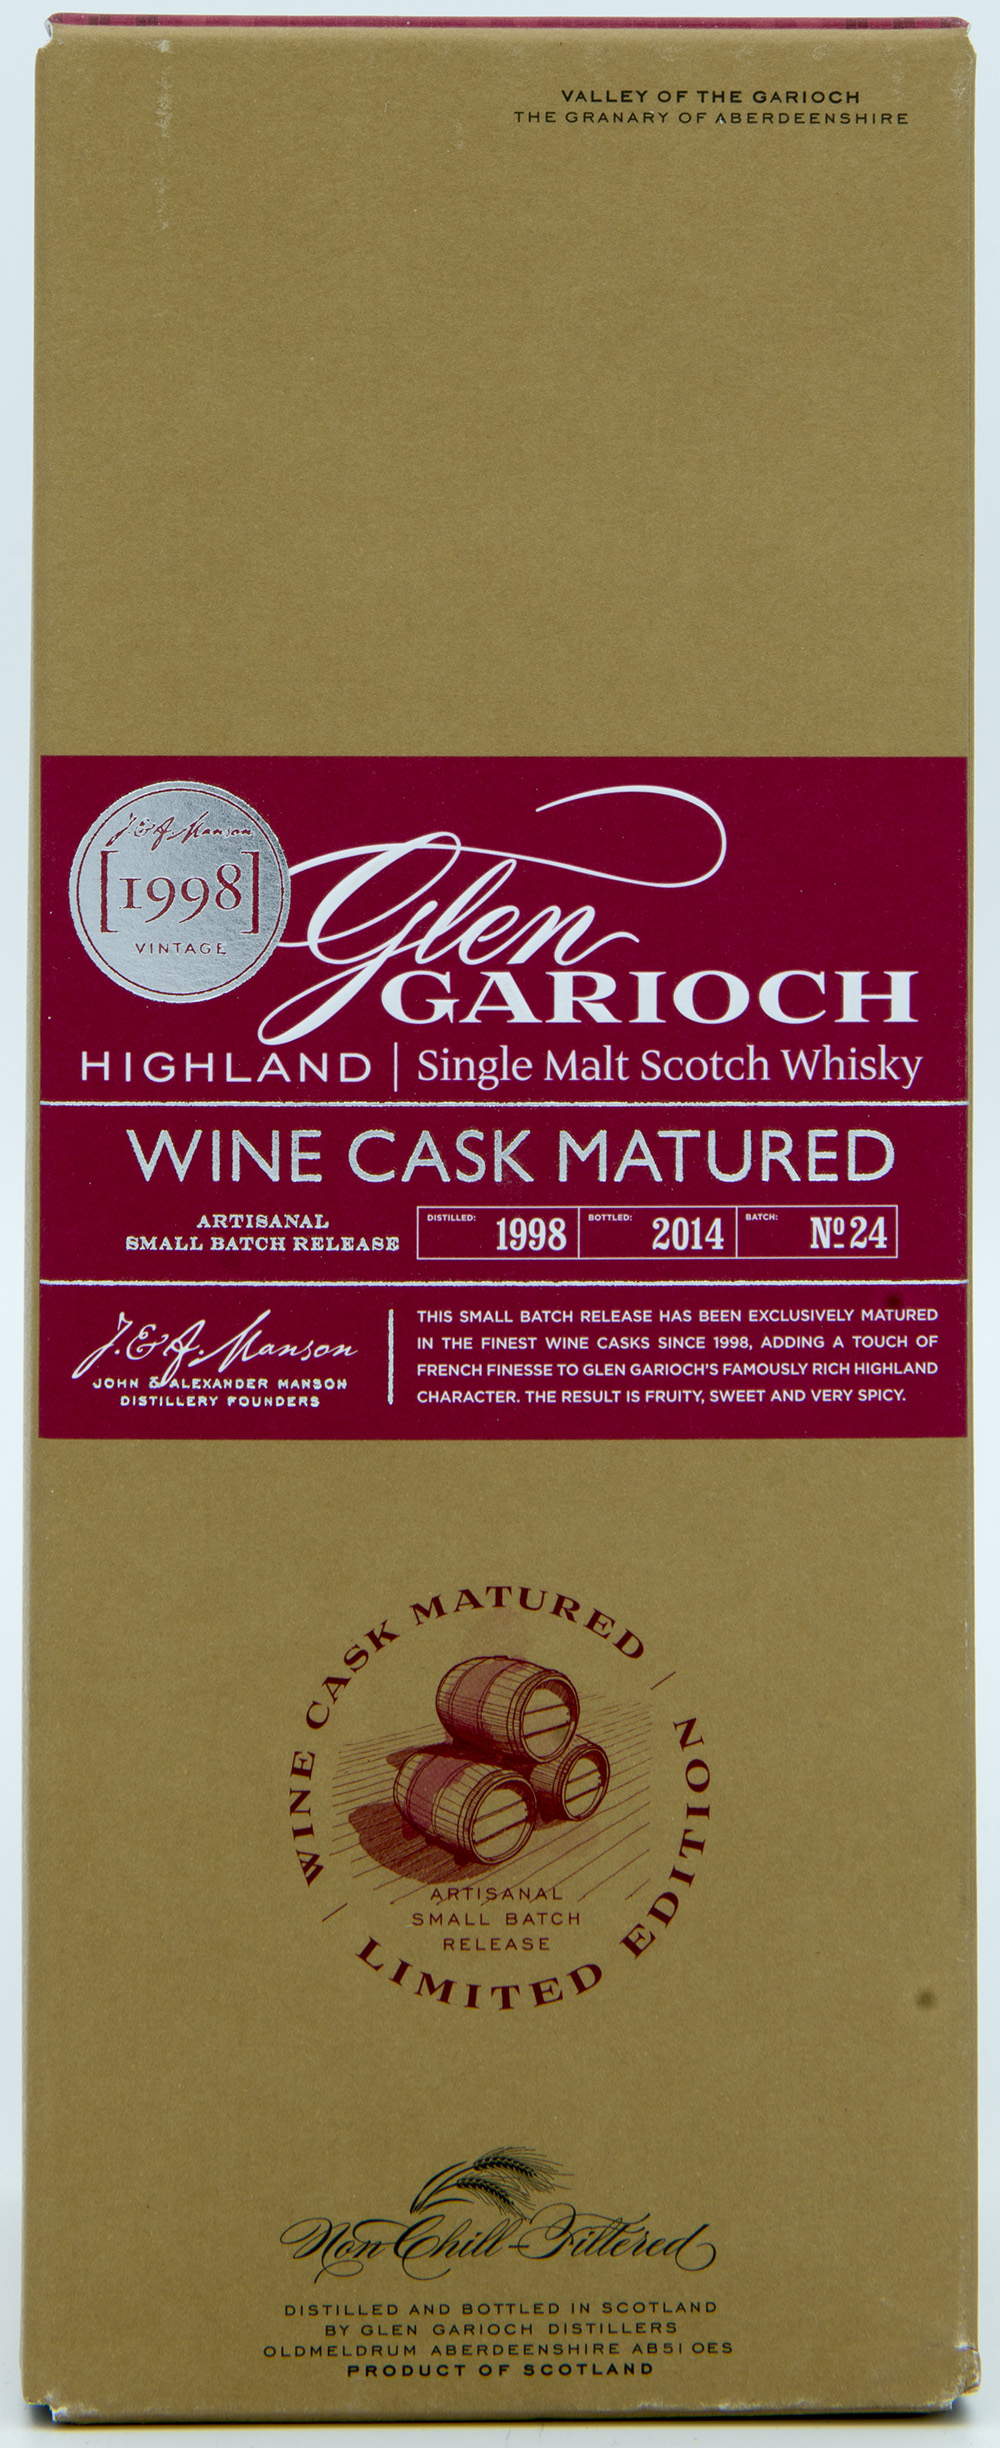 Billede: DSC_6563 Glen Garioch Batch 24 - Wine cask Matured 1998 - 2014 - box front.jpg